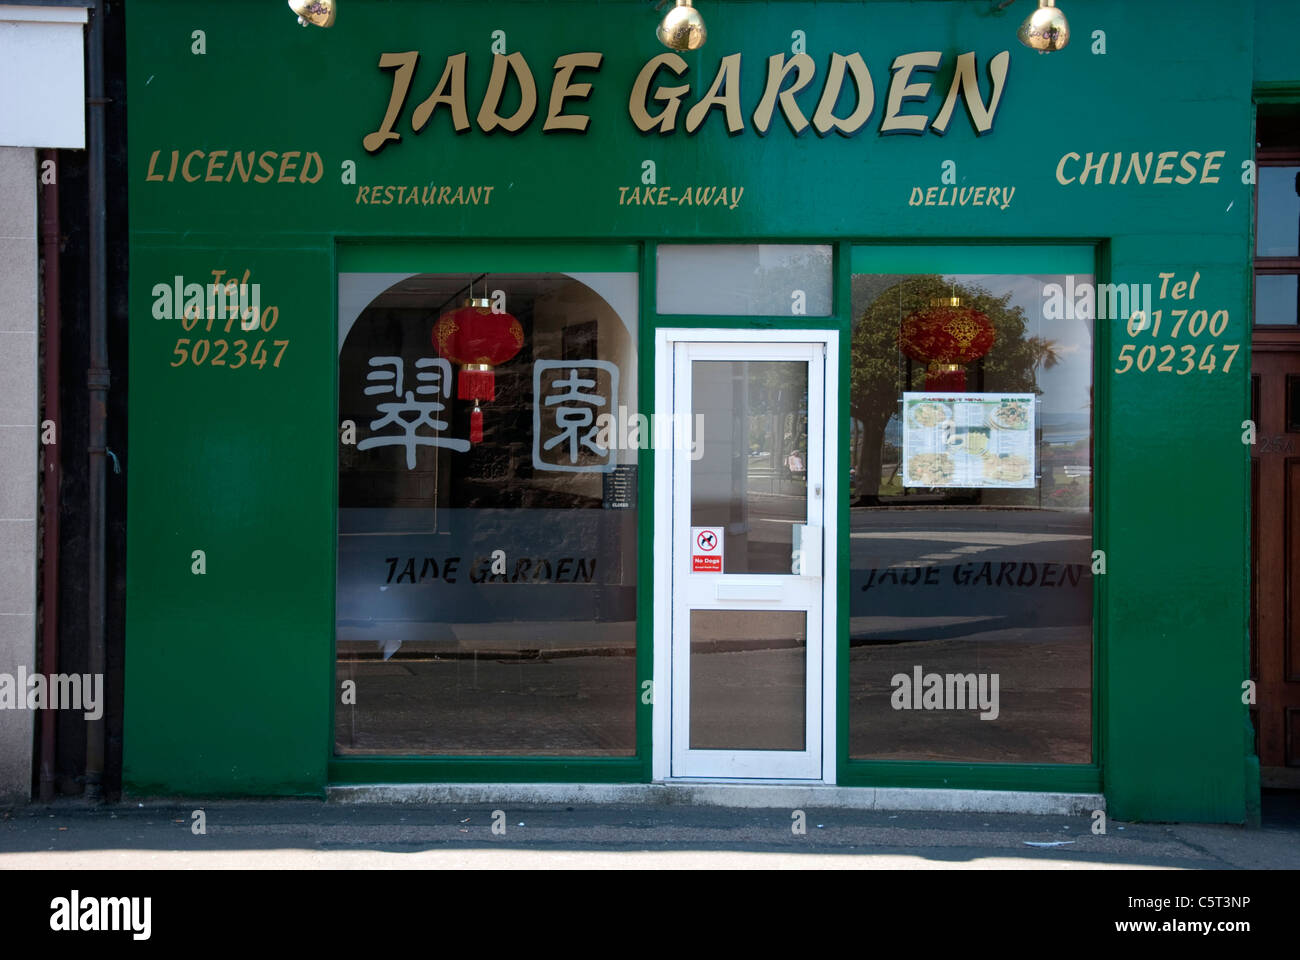 Jade Garden Licensed Chinese Restaurant & Takeaway Gallowgate Rothesay Isle of Bute Argyll Scotland UK United Kingdom Stock Photo